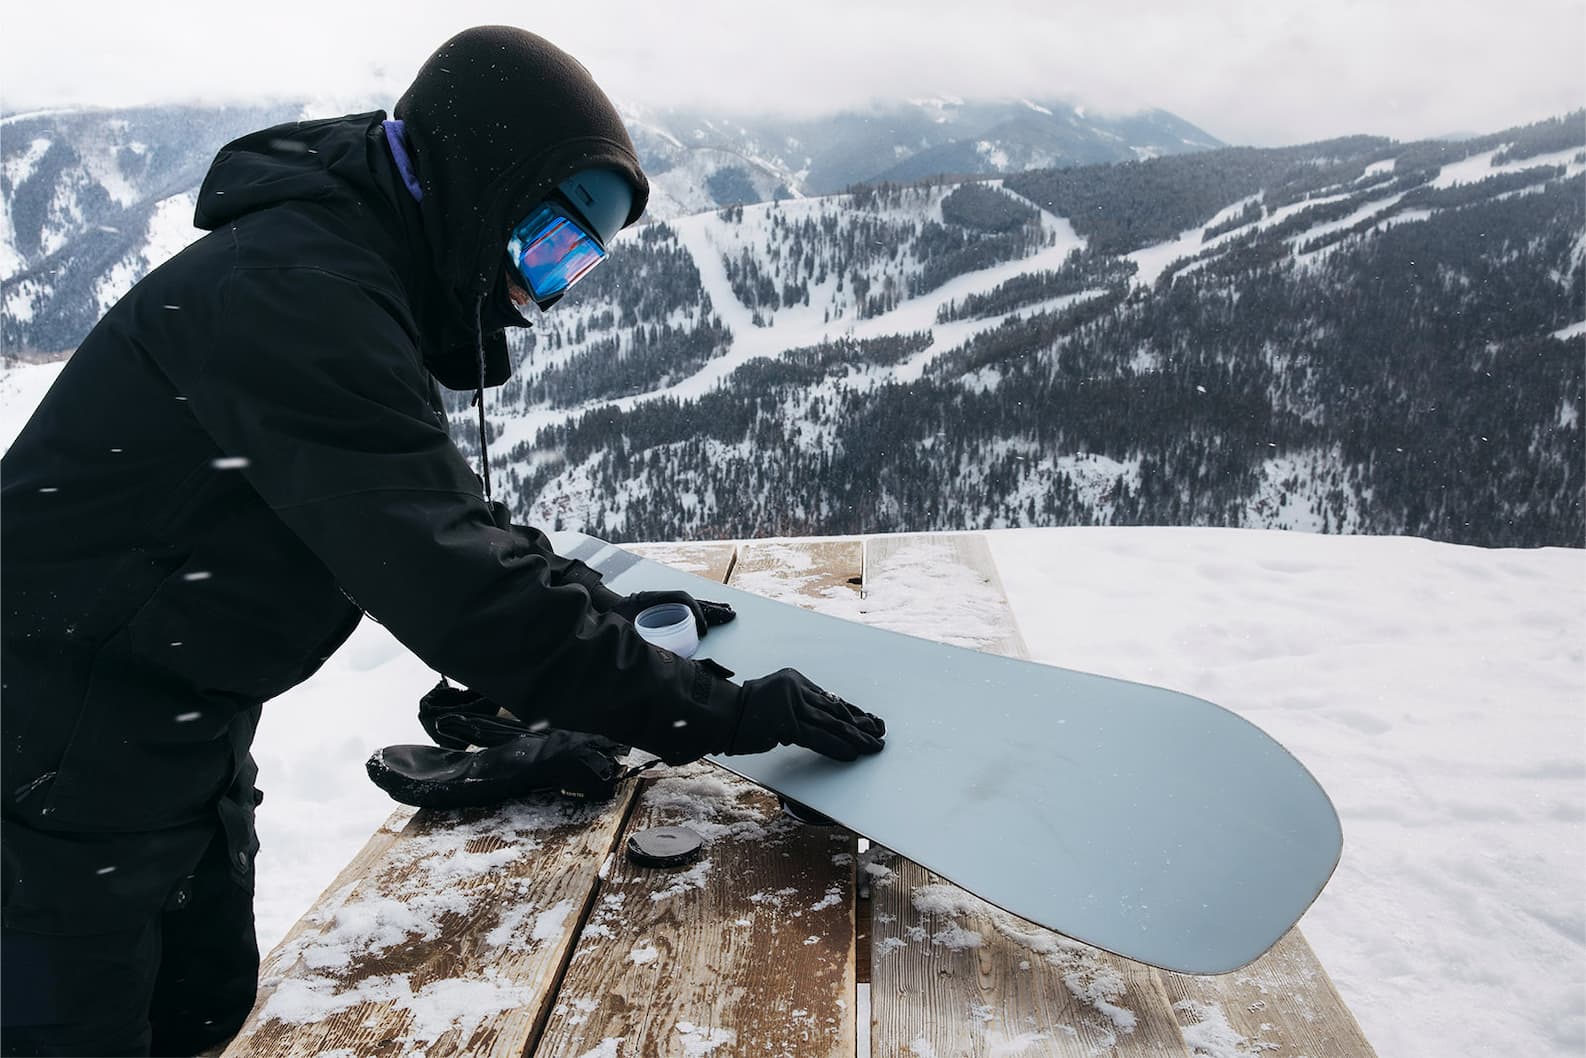 https://www.burton.com/static/community/advice/snowboard-wax-types-applying-rub-on-wax.jpg